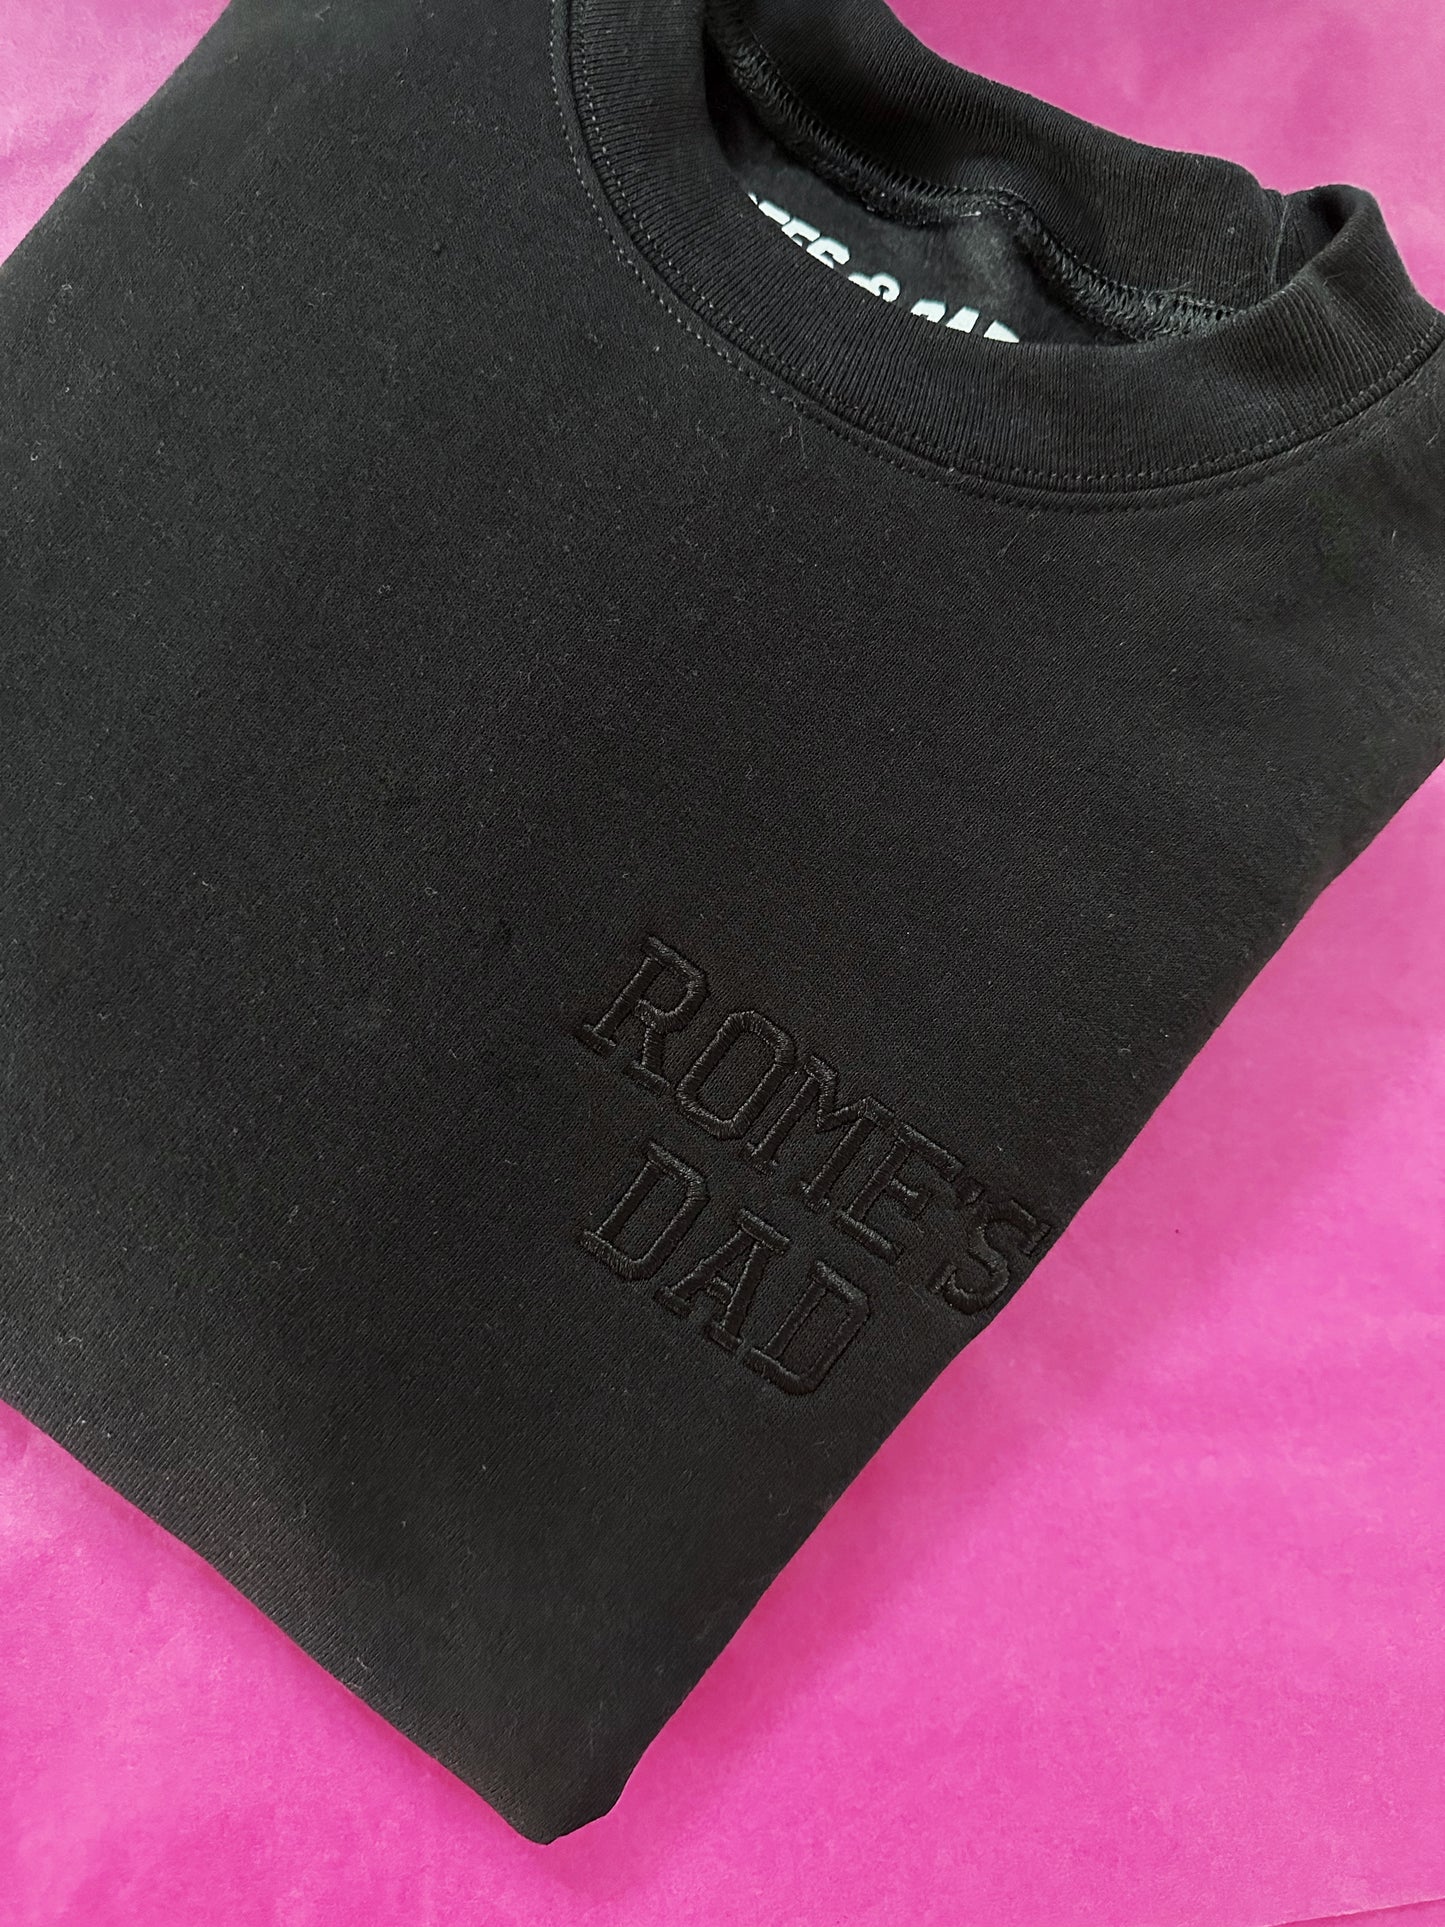 BLACK ON BLACK STITCH ♡ customizable stitch sweatshirt for adults & kids